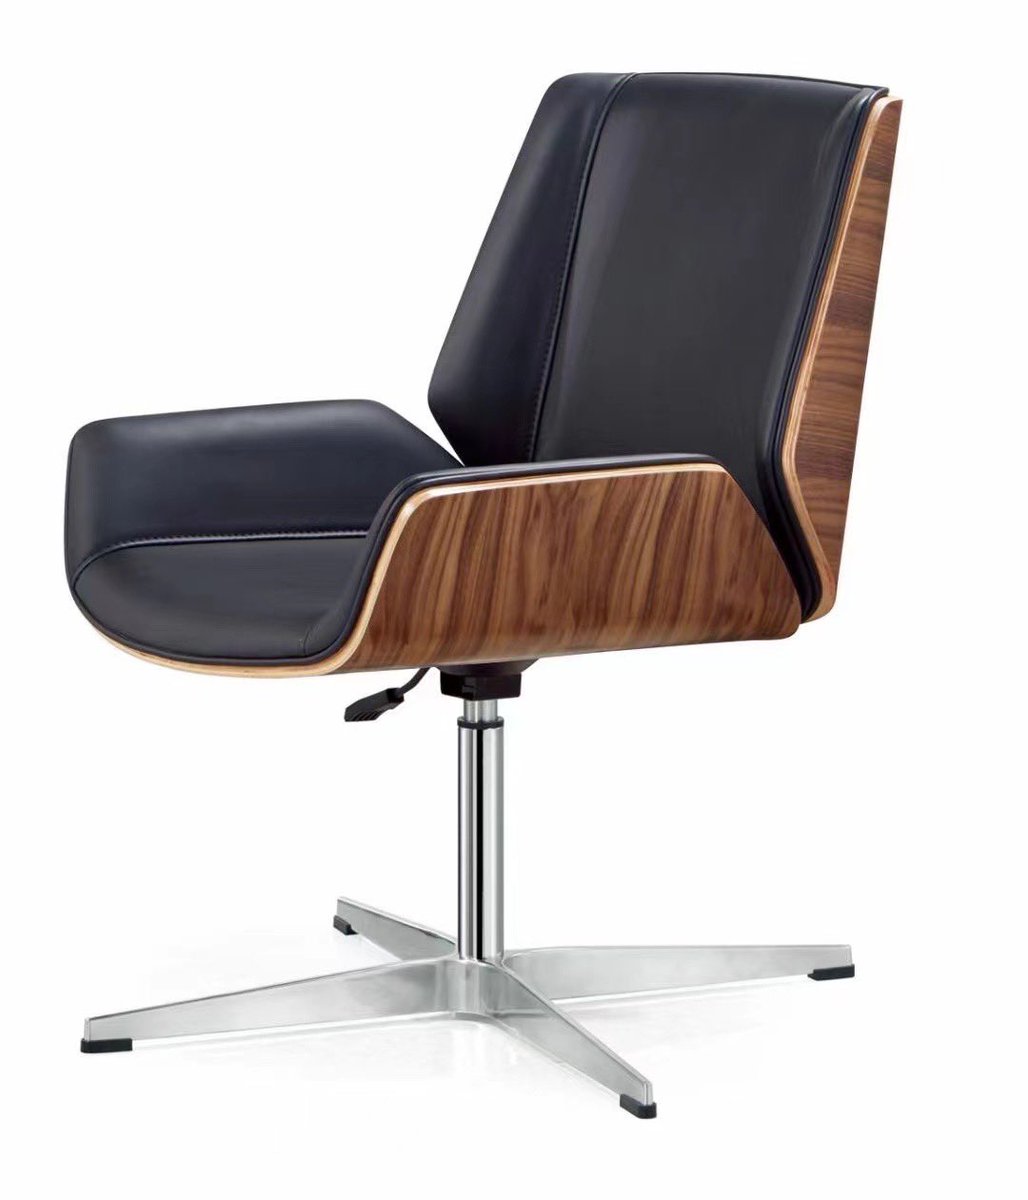 #puleatherchair #officefurniture #homefurniture #chairs #chinasupplier #highendfurniture